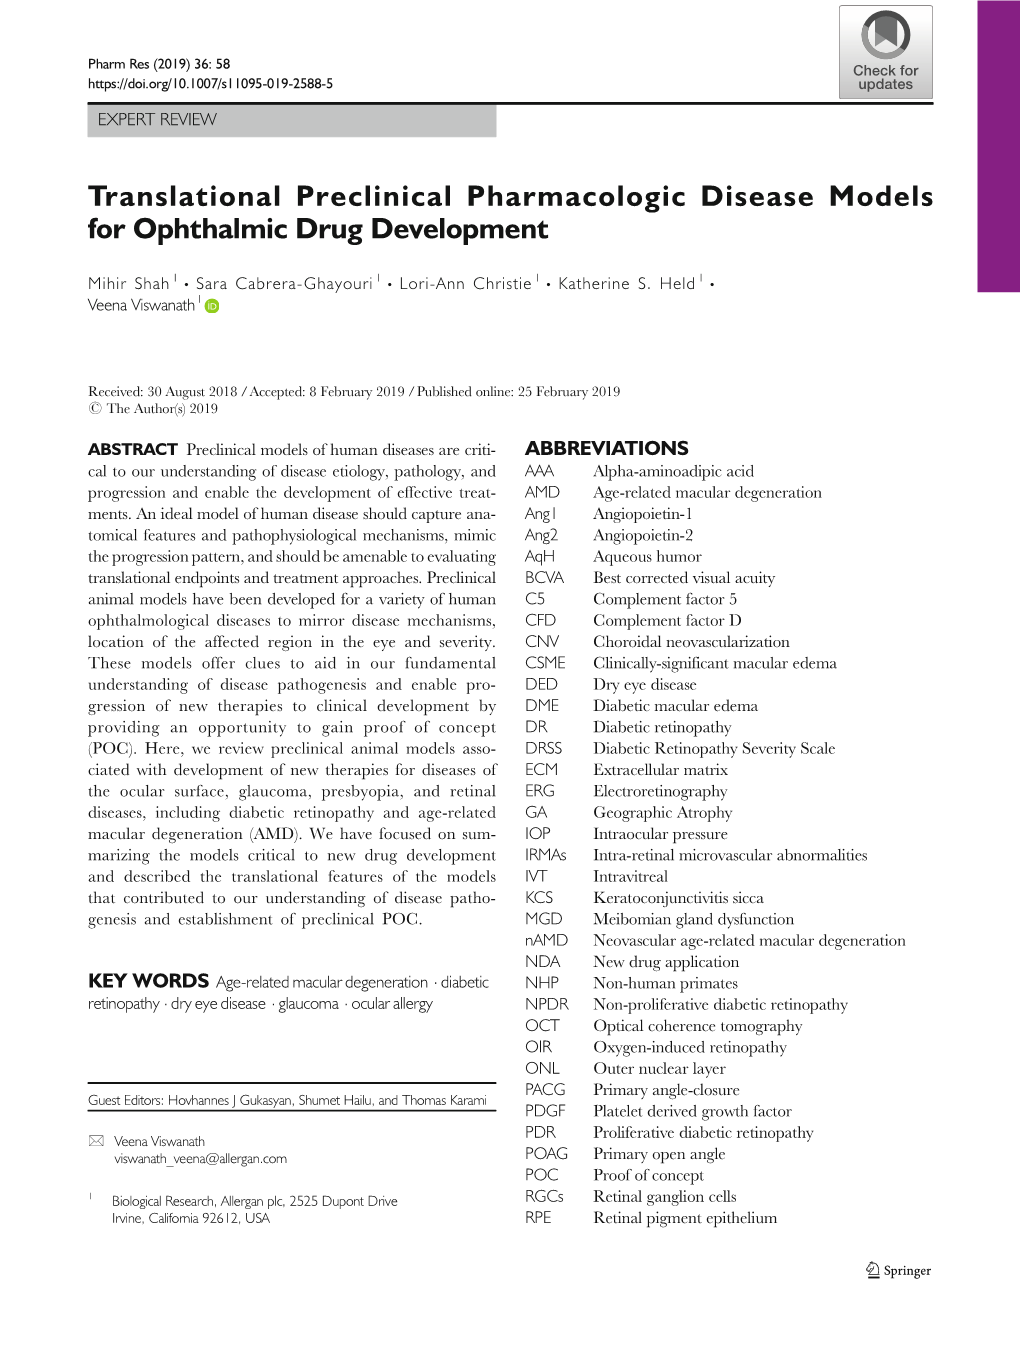 Translational Preclinical Pharmacologic Disease Models for Ophthalmic Drug Development